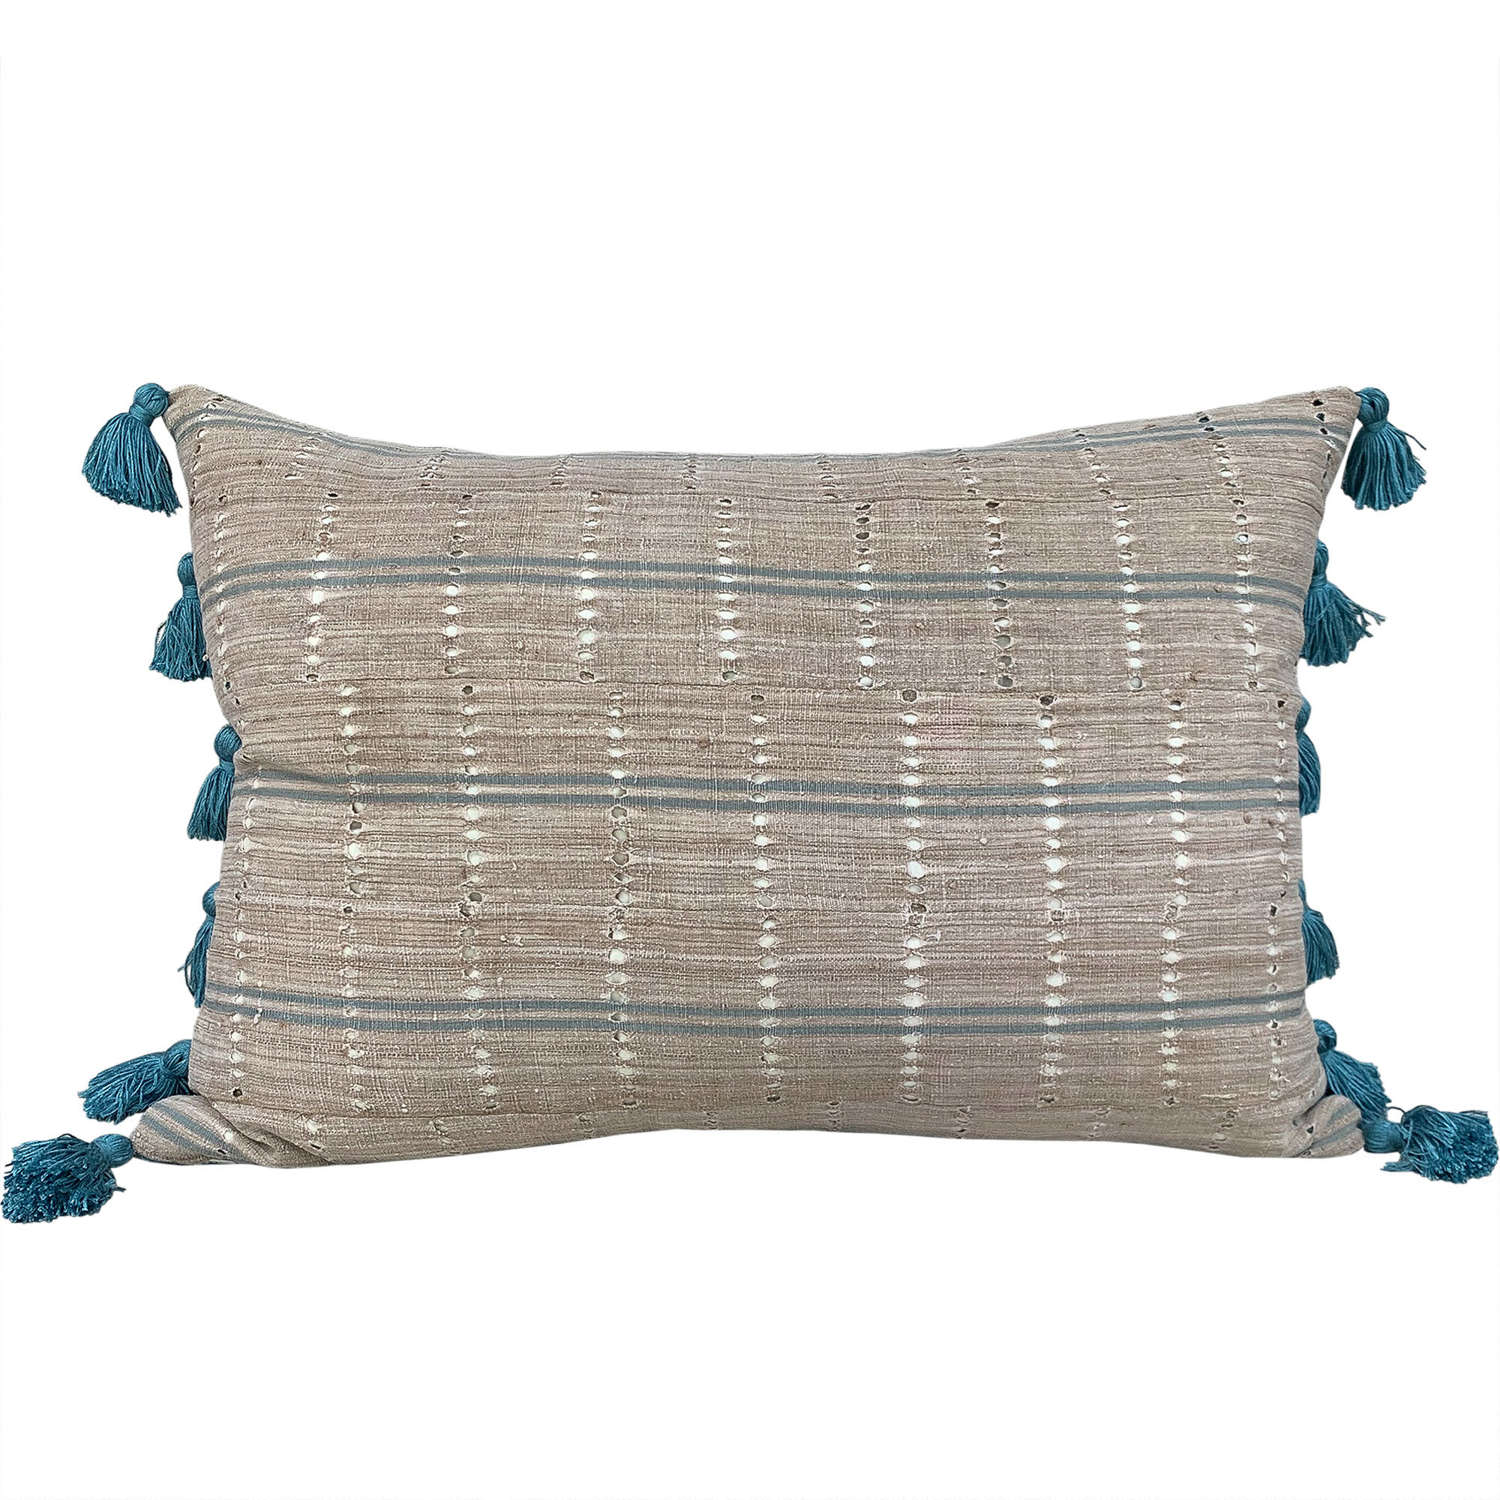 Yoruba cushions with teal tassels